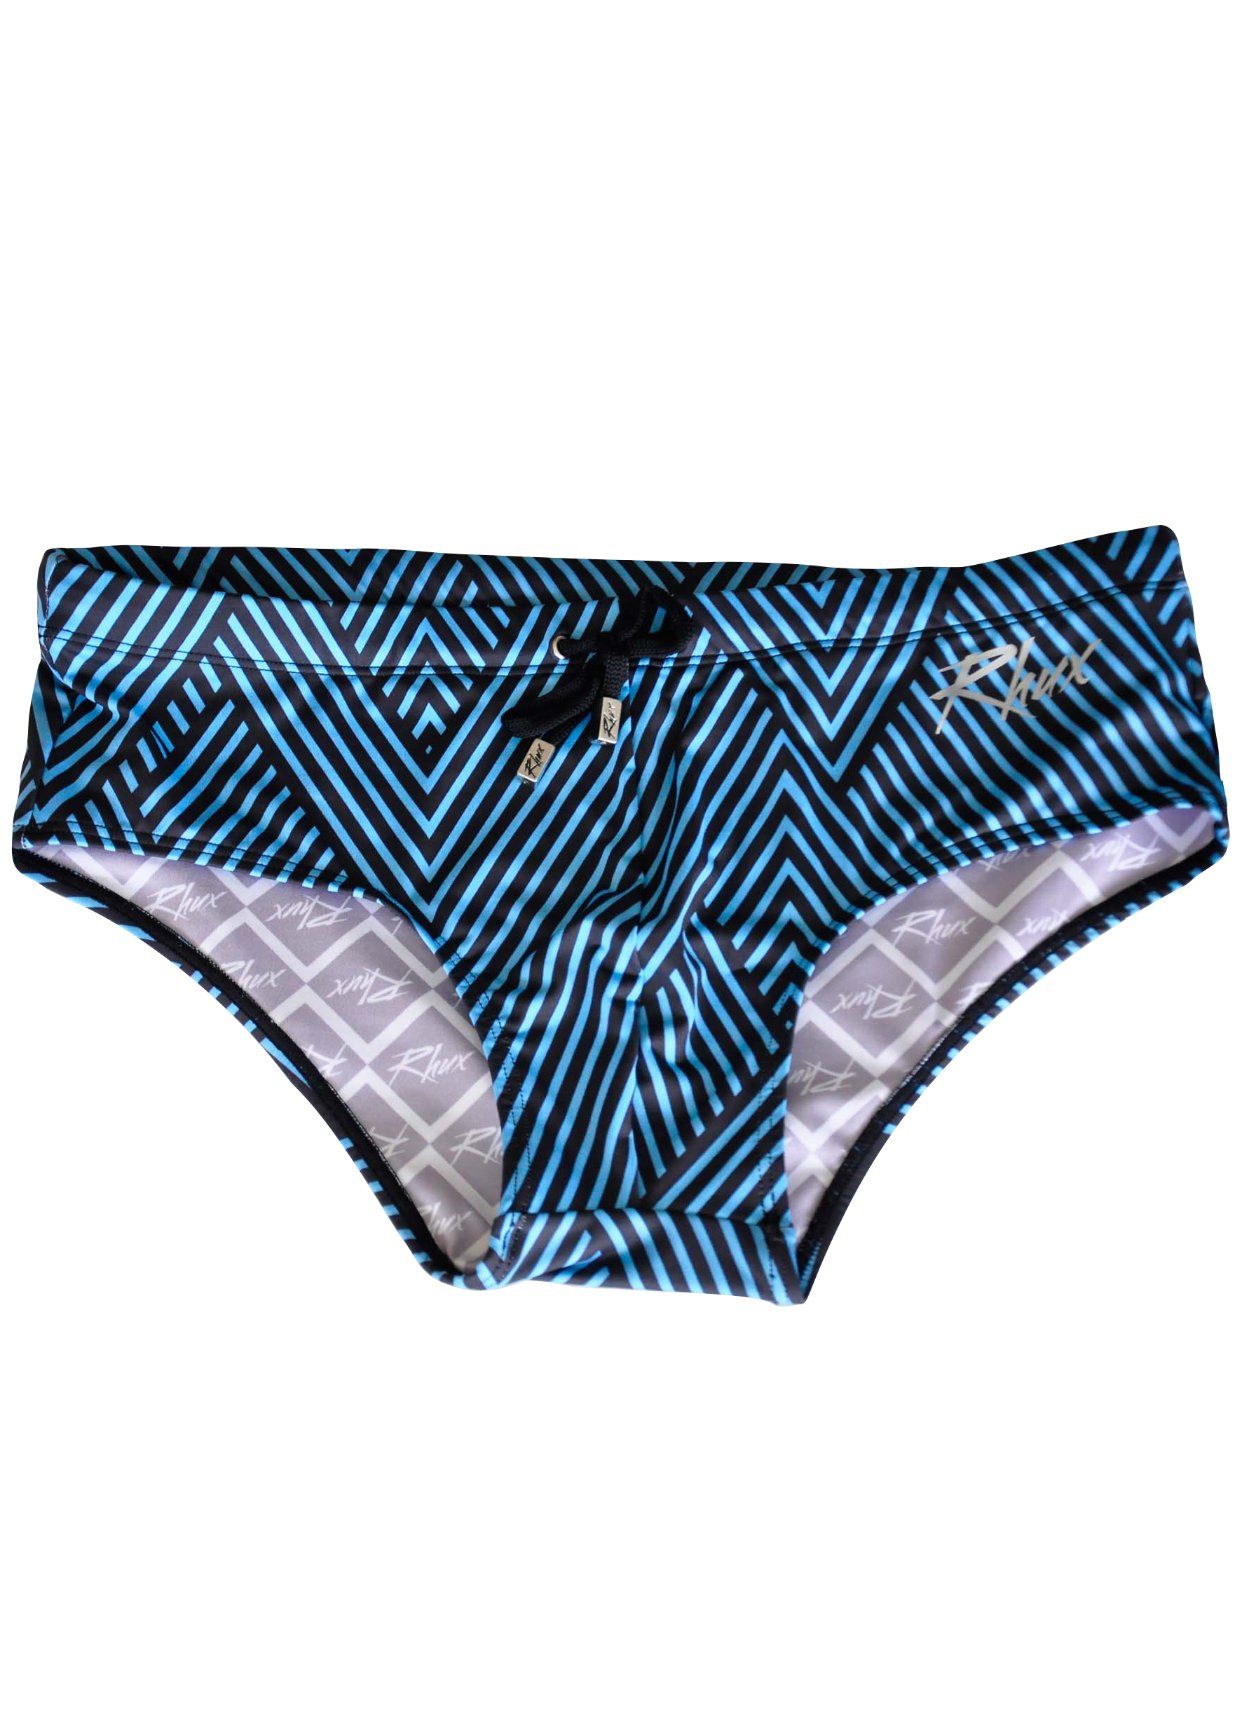 RHUX KOKO Sunga Swimming Briefs Men's Swimwear Striped Geometric Design Black Blue - Activemen Clothing